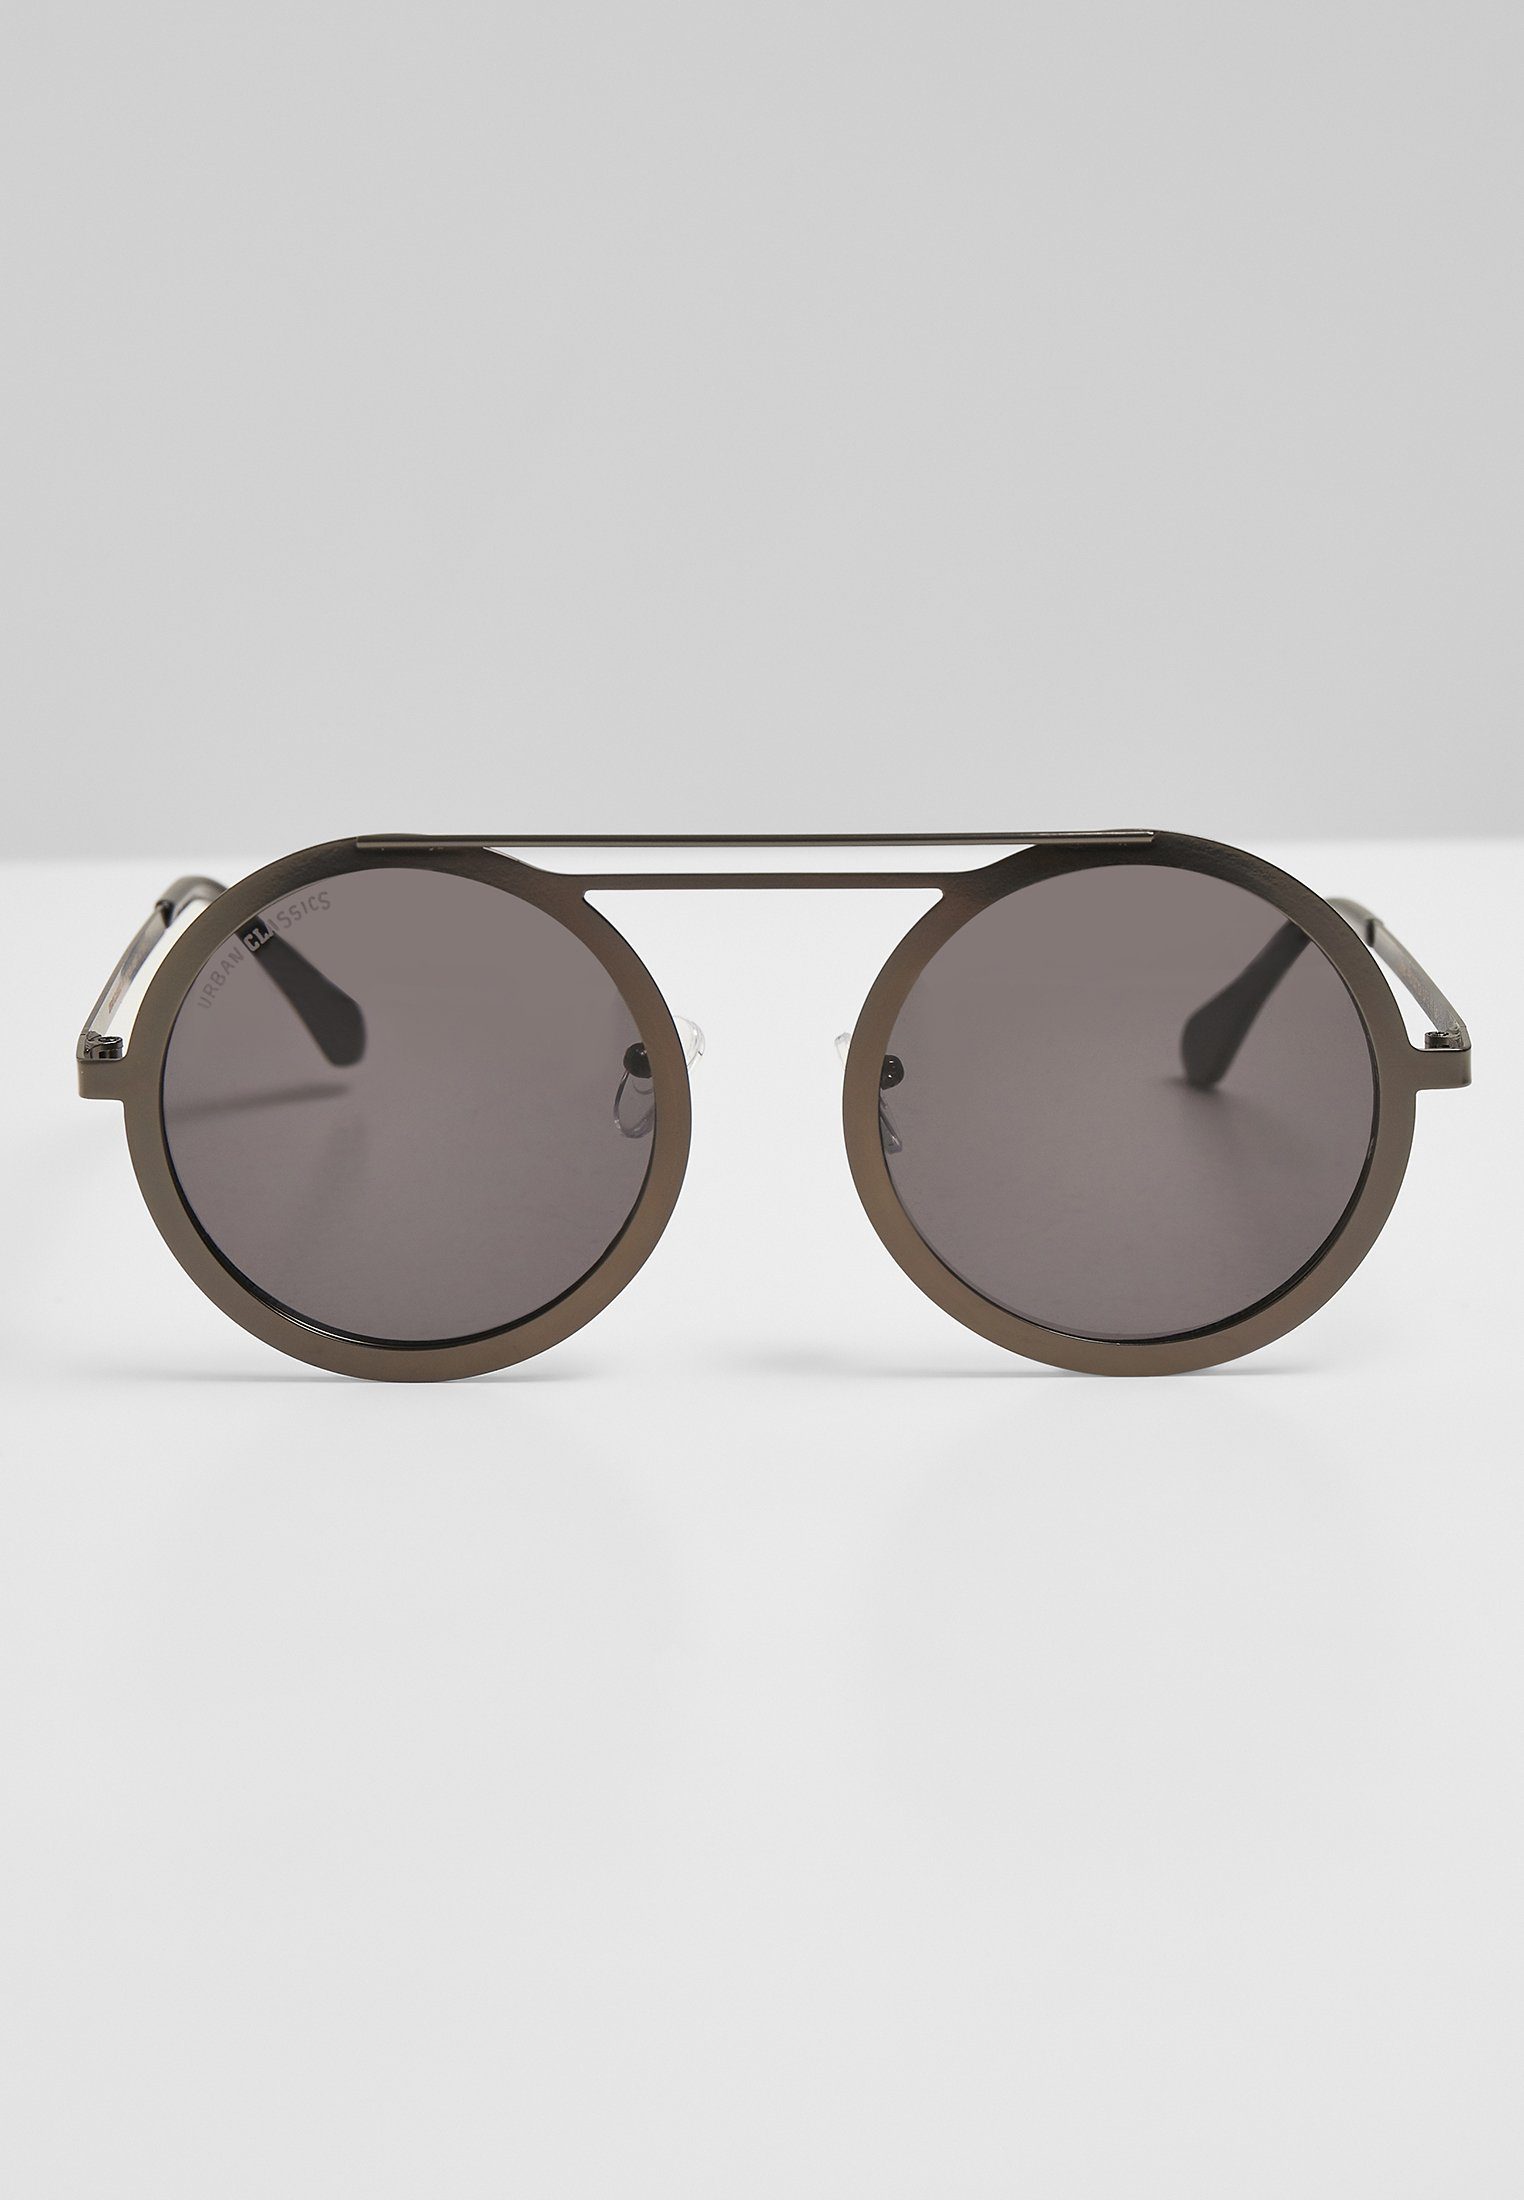 Sunglasses URBAN UC 104 Sonnenbrille Accessoires CLASSICS gunmetal/black